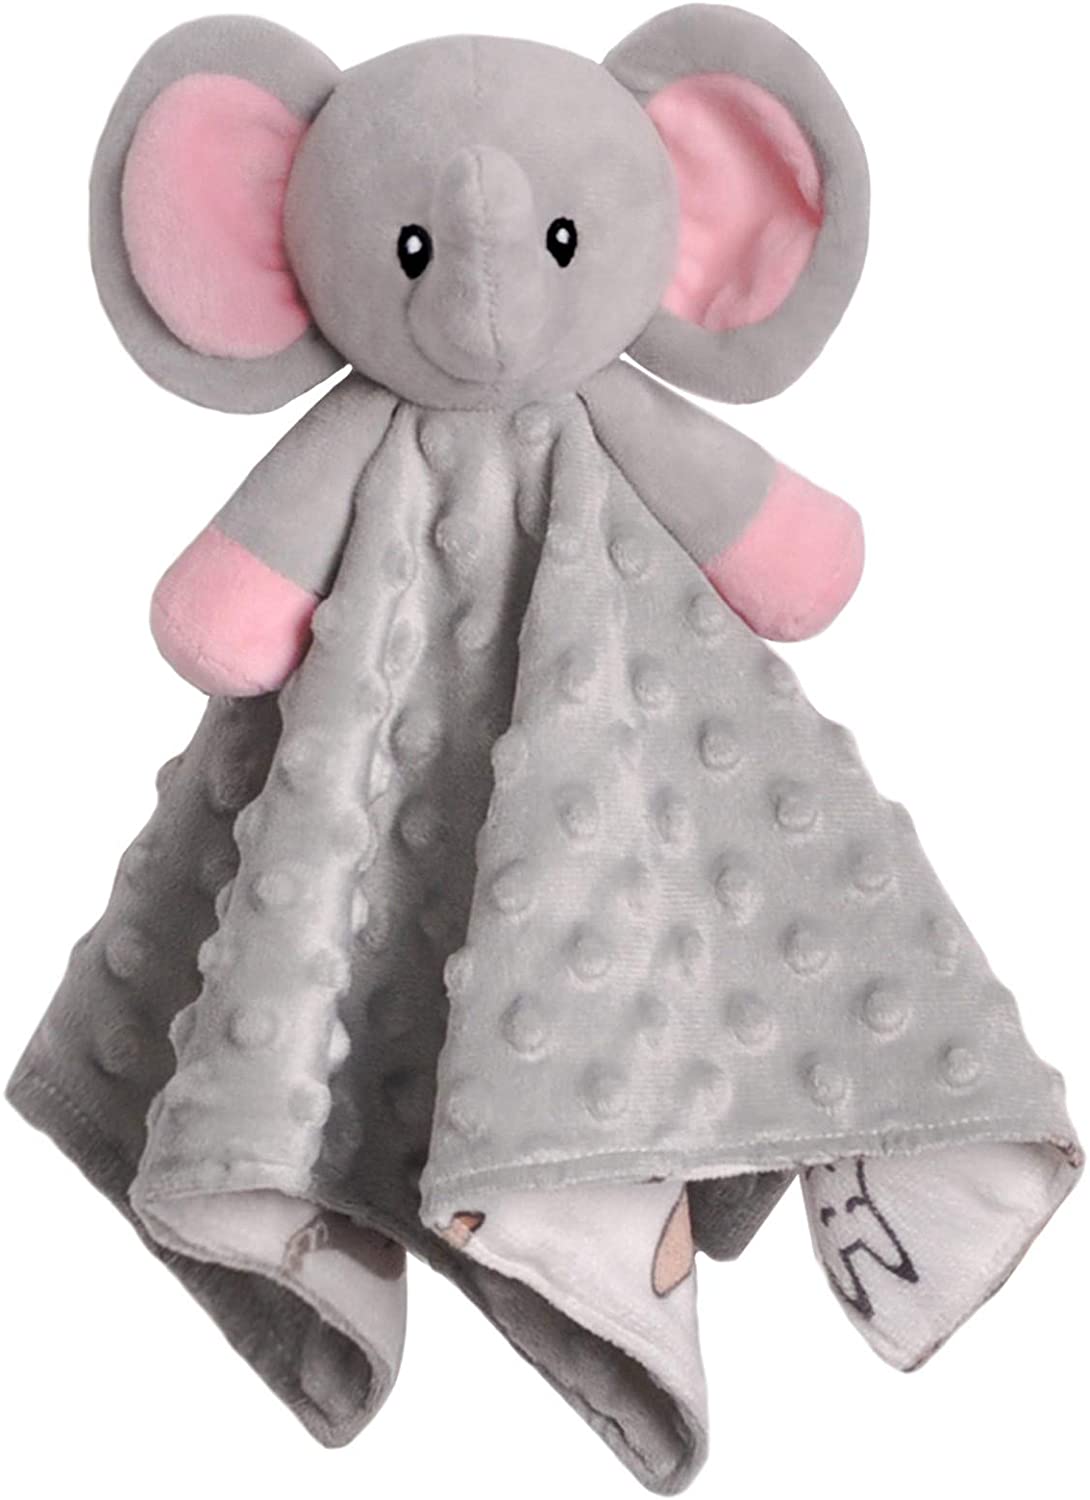 Gray, 15” Pro Goleem Elephant Baby Lovey Stuffed Plush Lovie/Security Blanket for Boys and Girls Minky Dot Fabric Best Gift for Newborn/Infant 